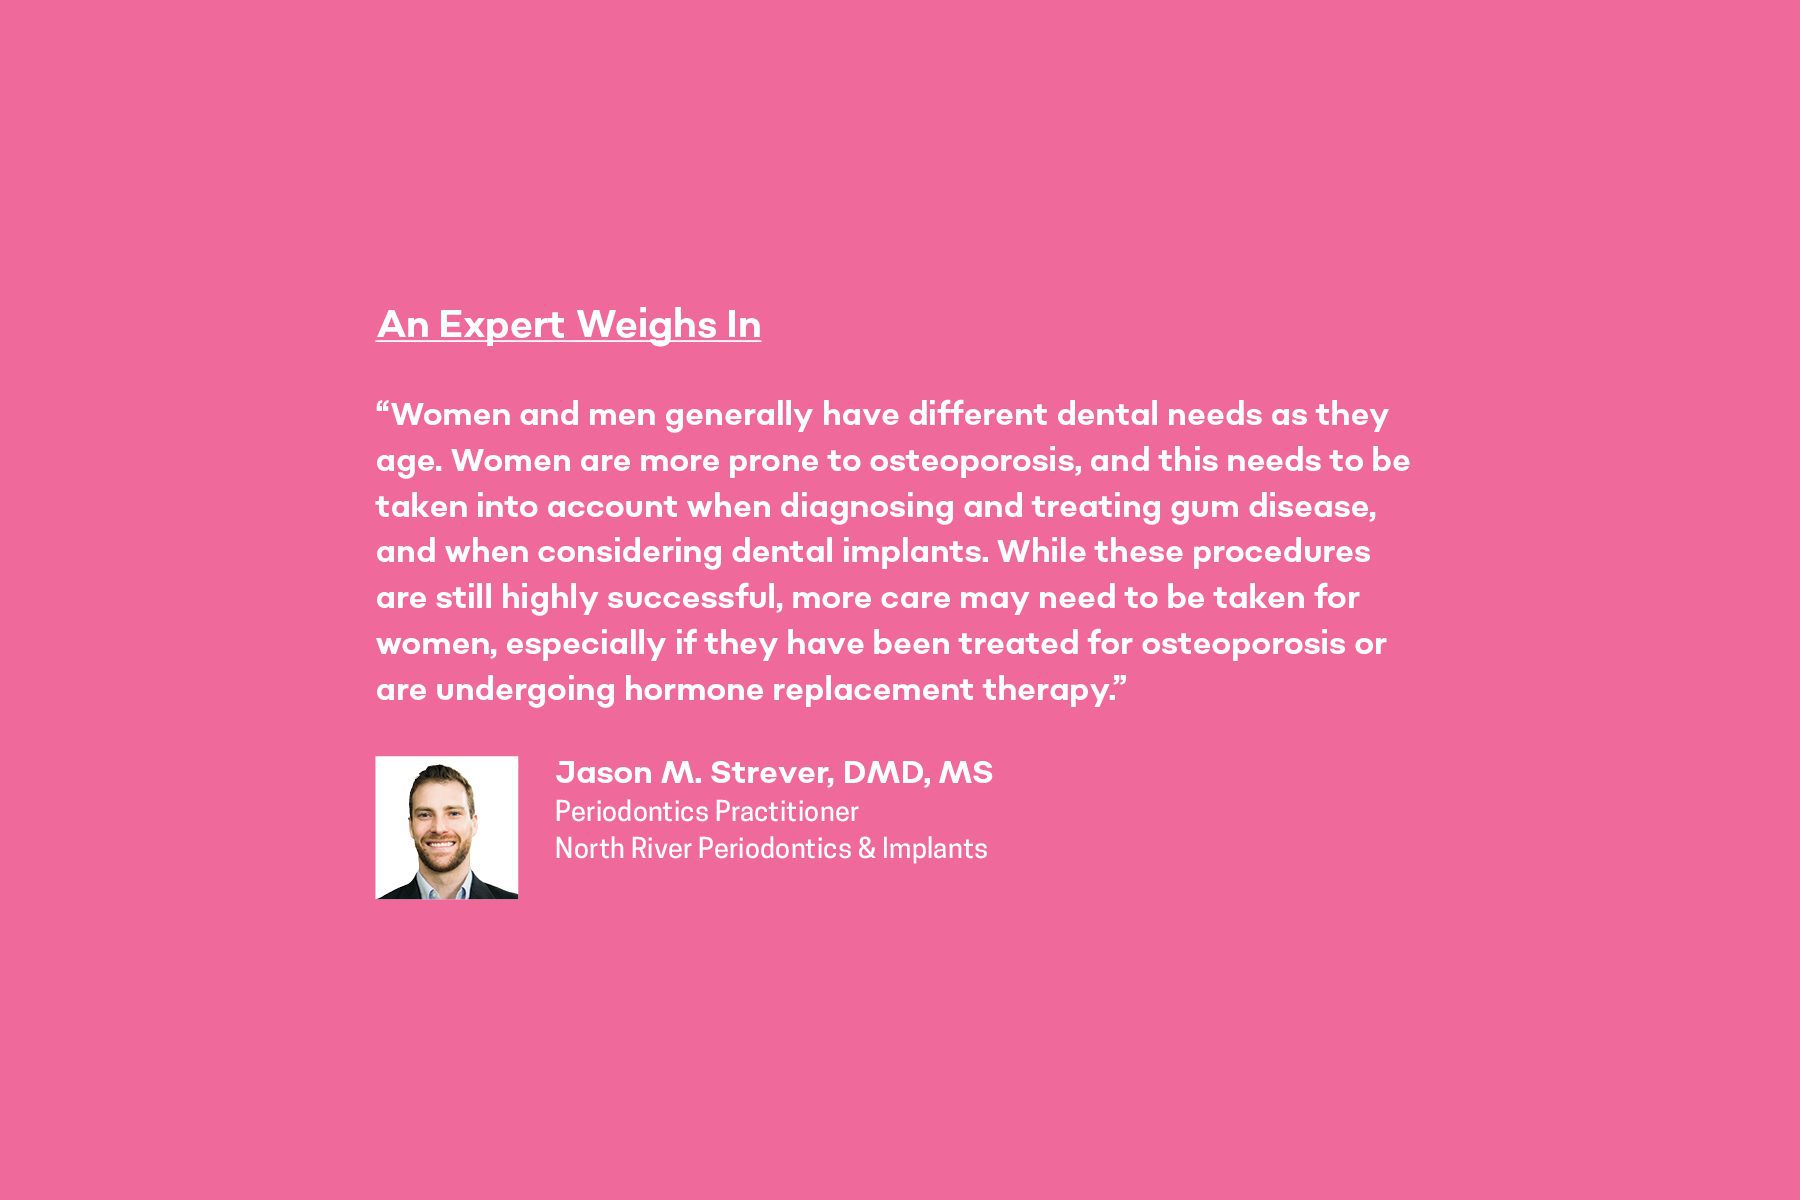 Jason M. Strever shares an expert opinion on dental implants for women